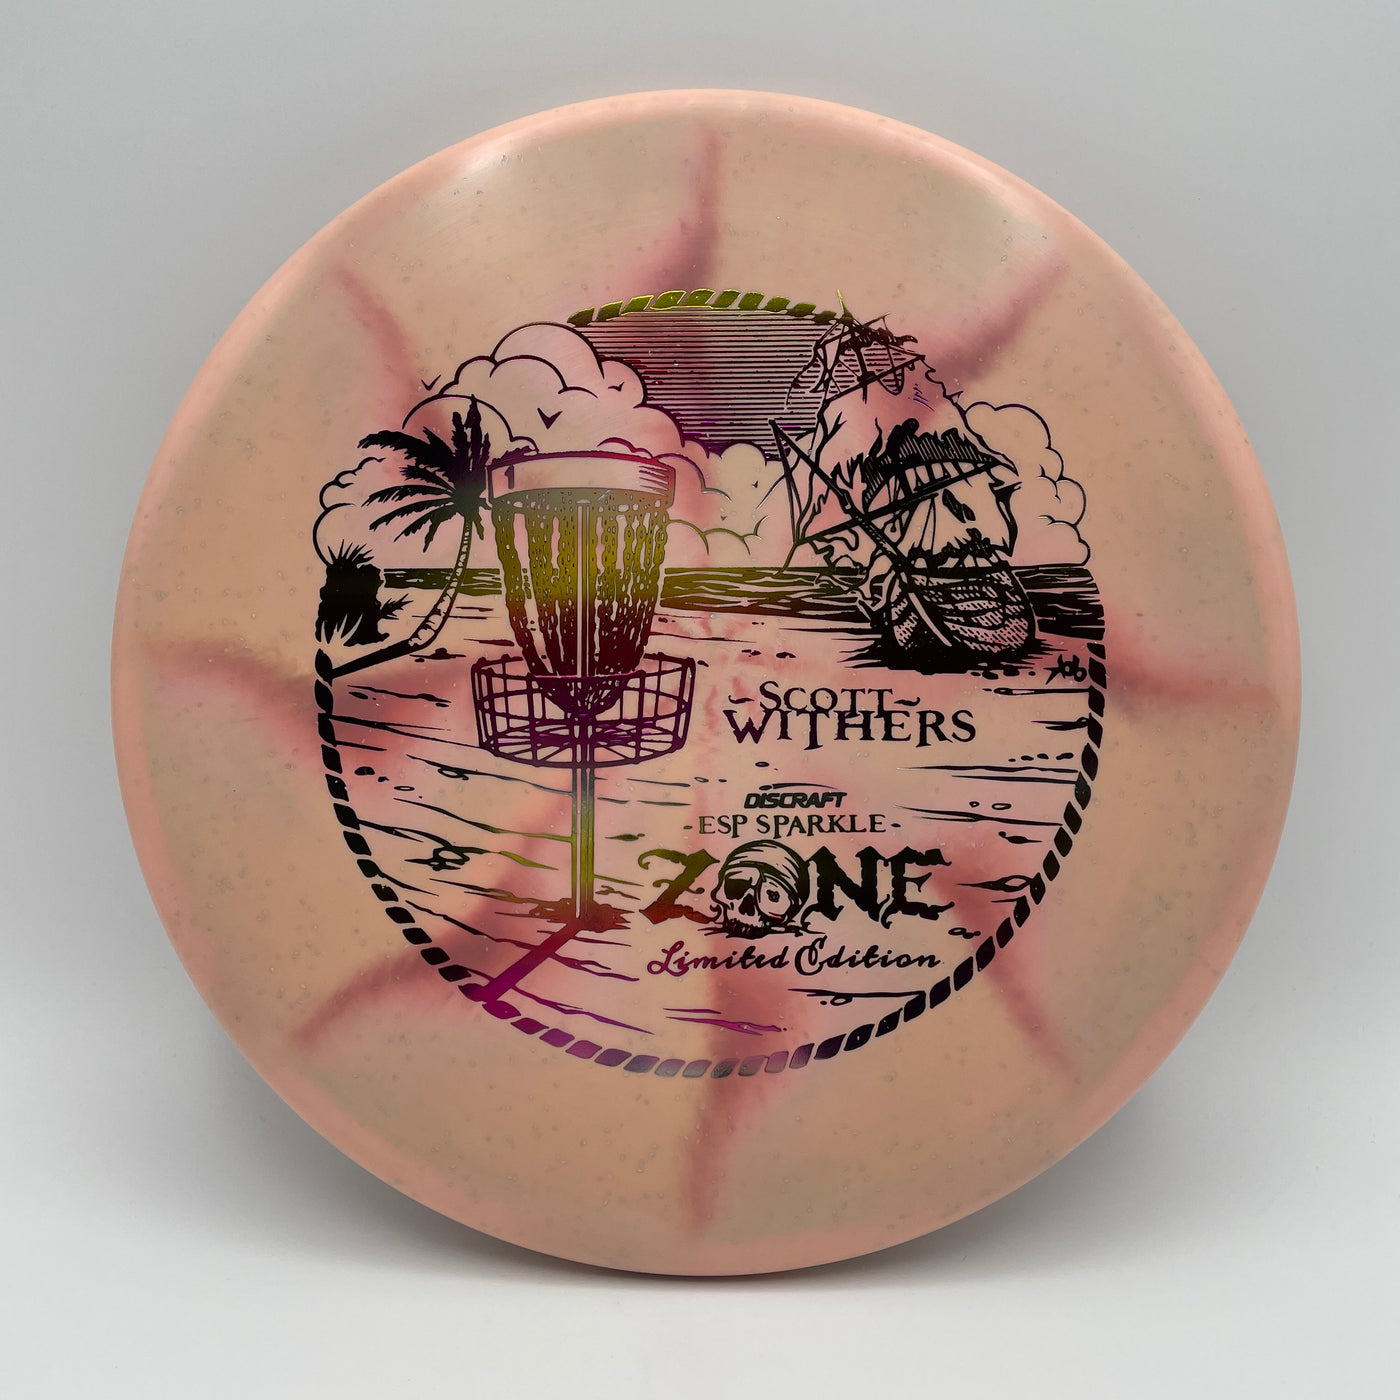 Scott Withers ESP Sparkle Zone - Summer Sunset Stamp